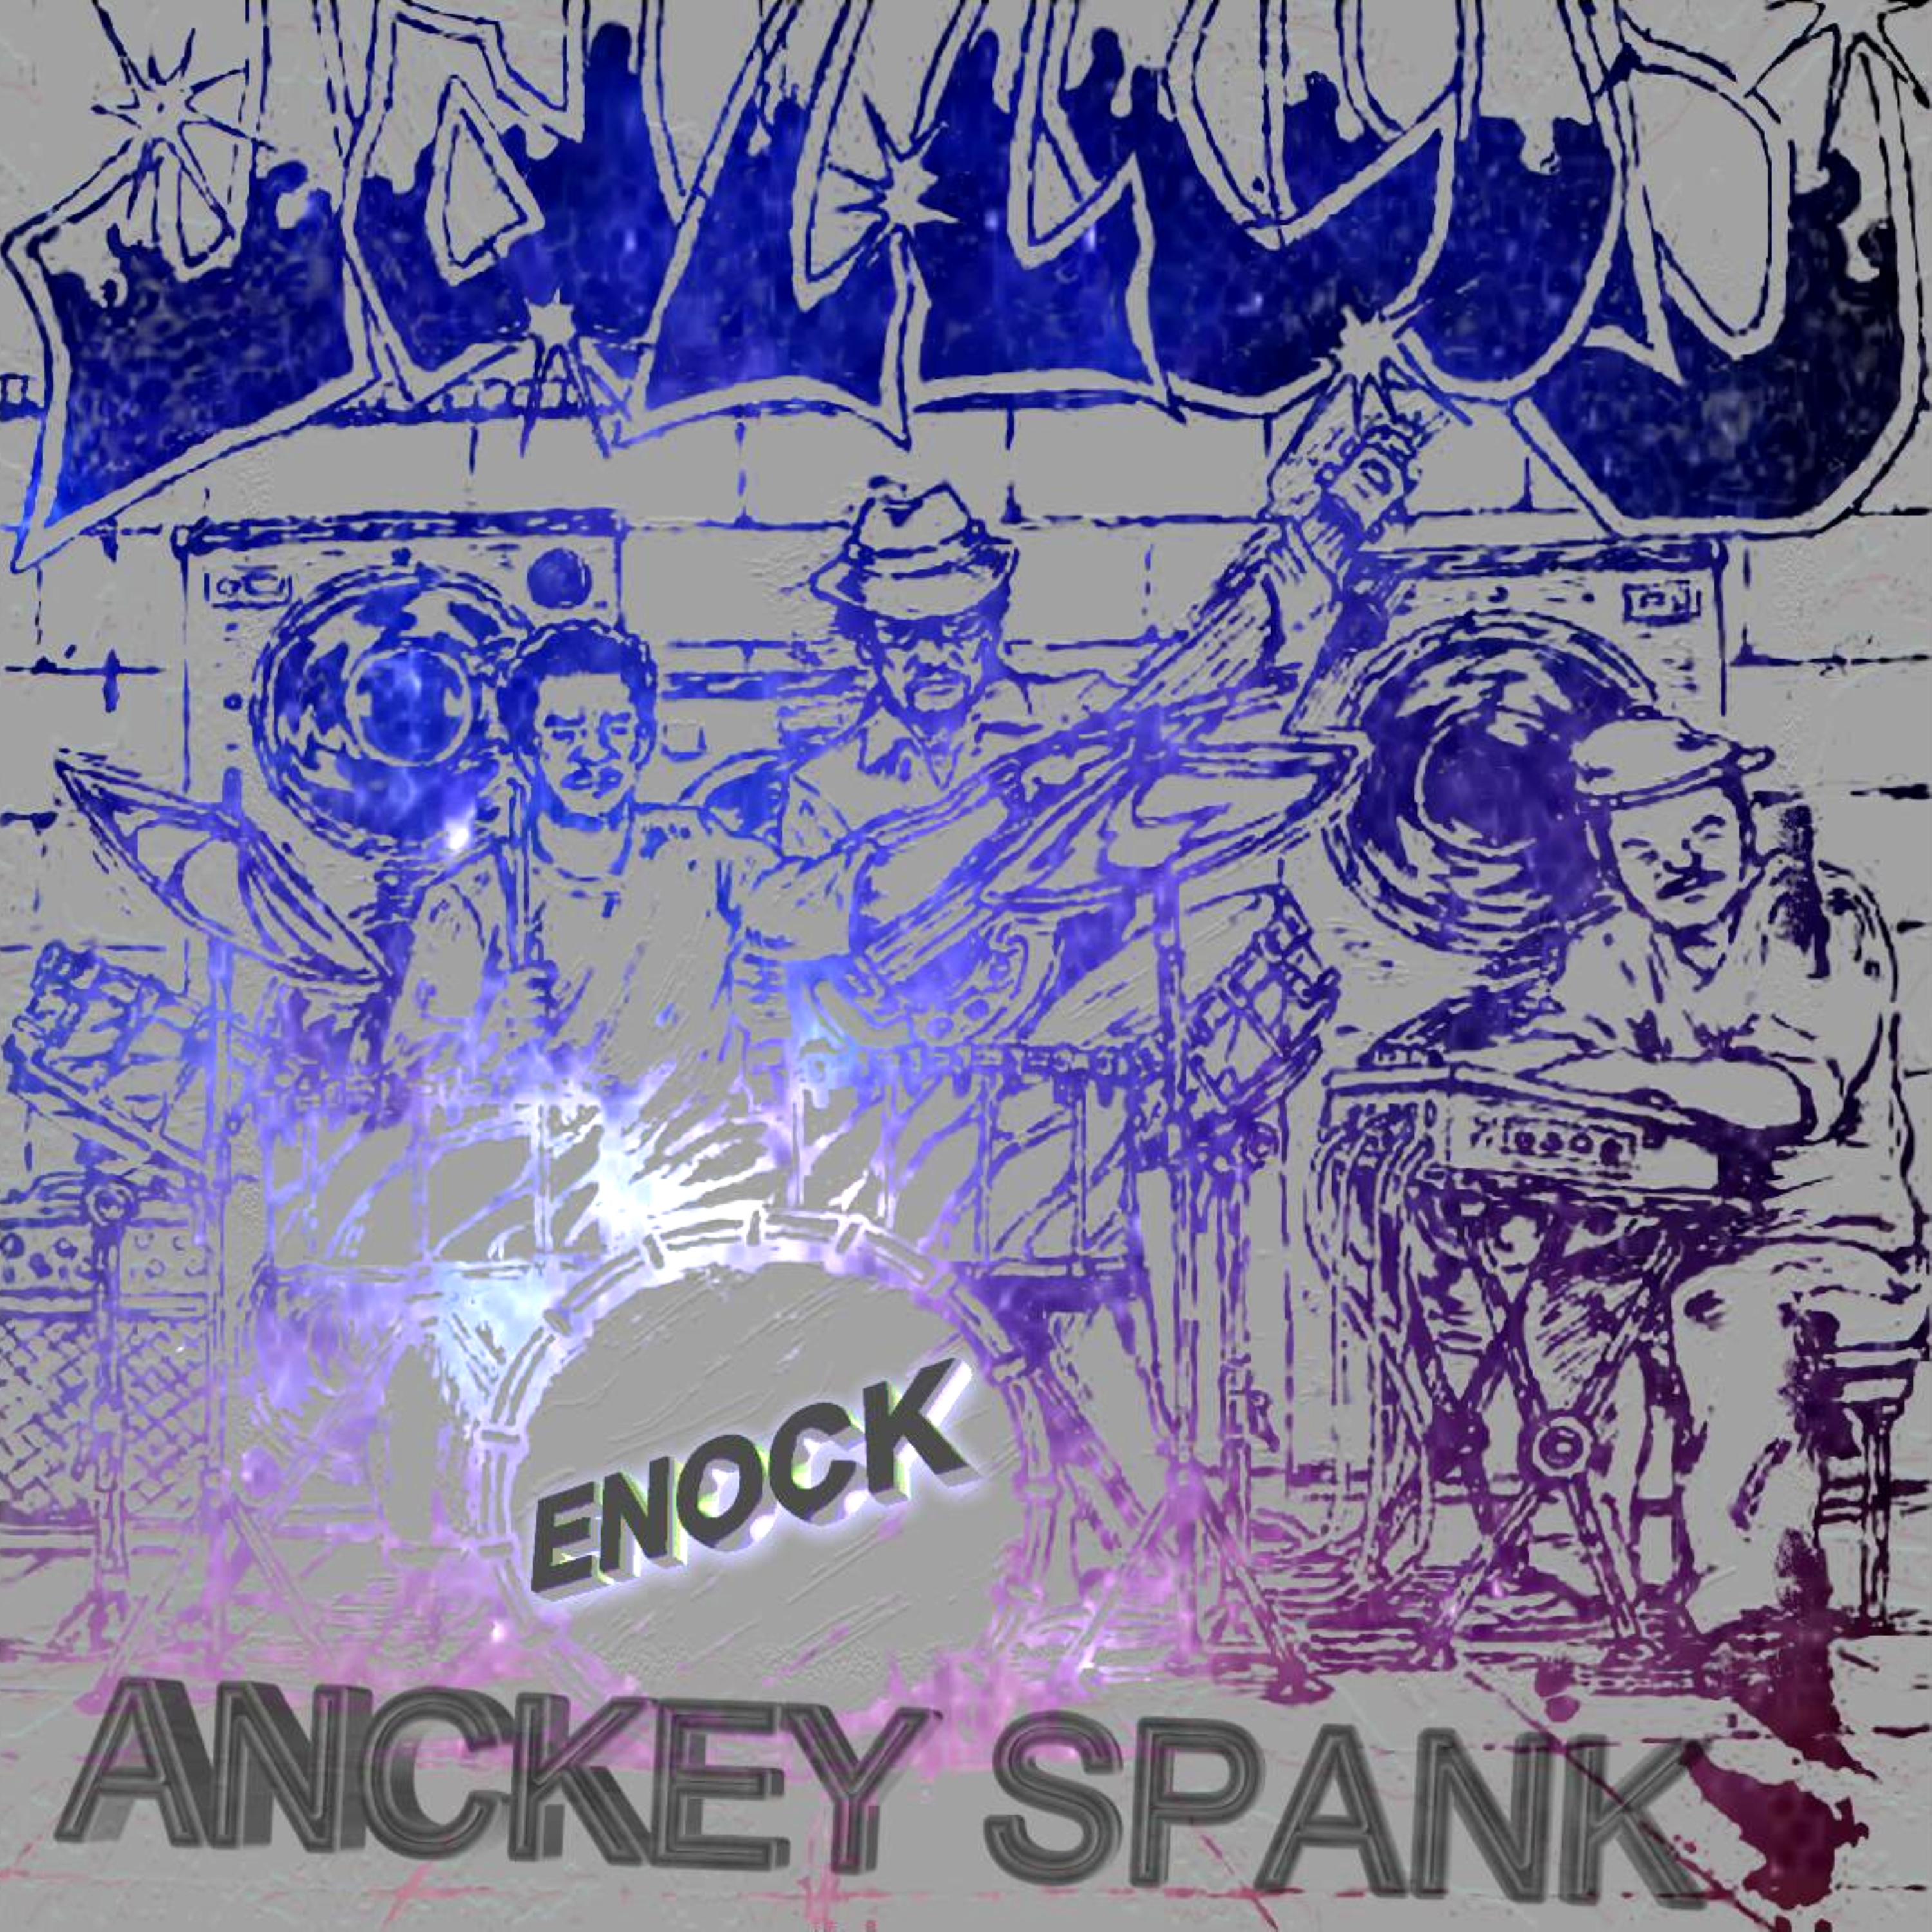 Art for AnCkey Spank by ENOCK